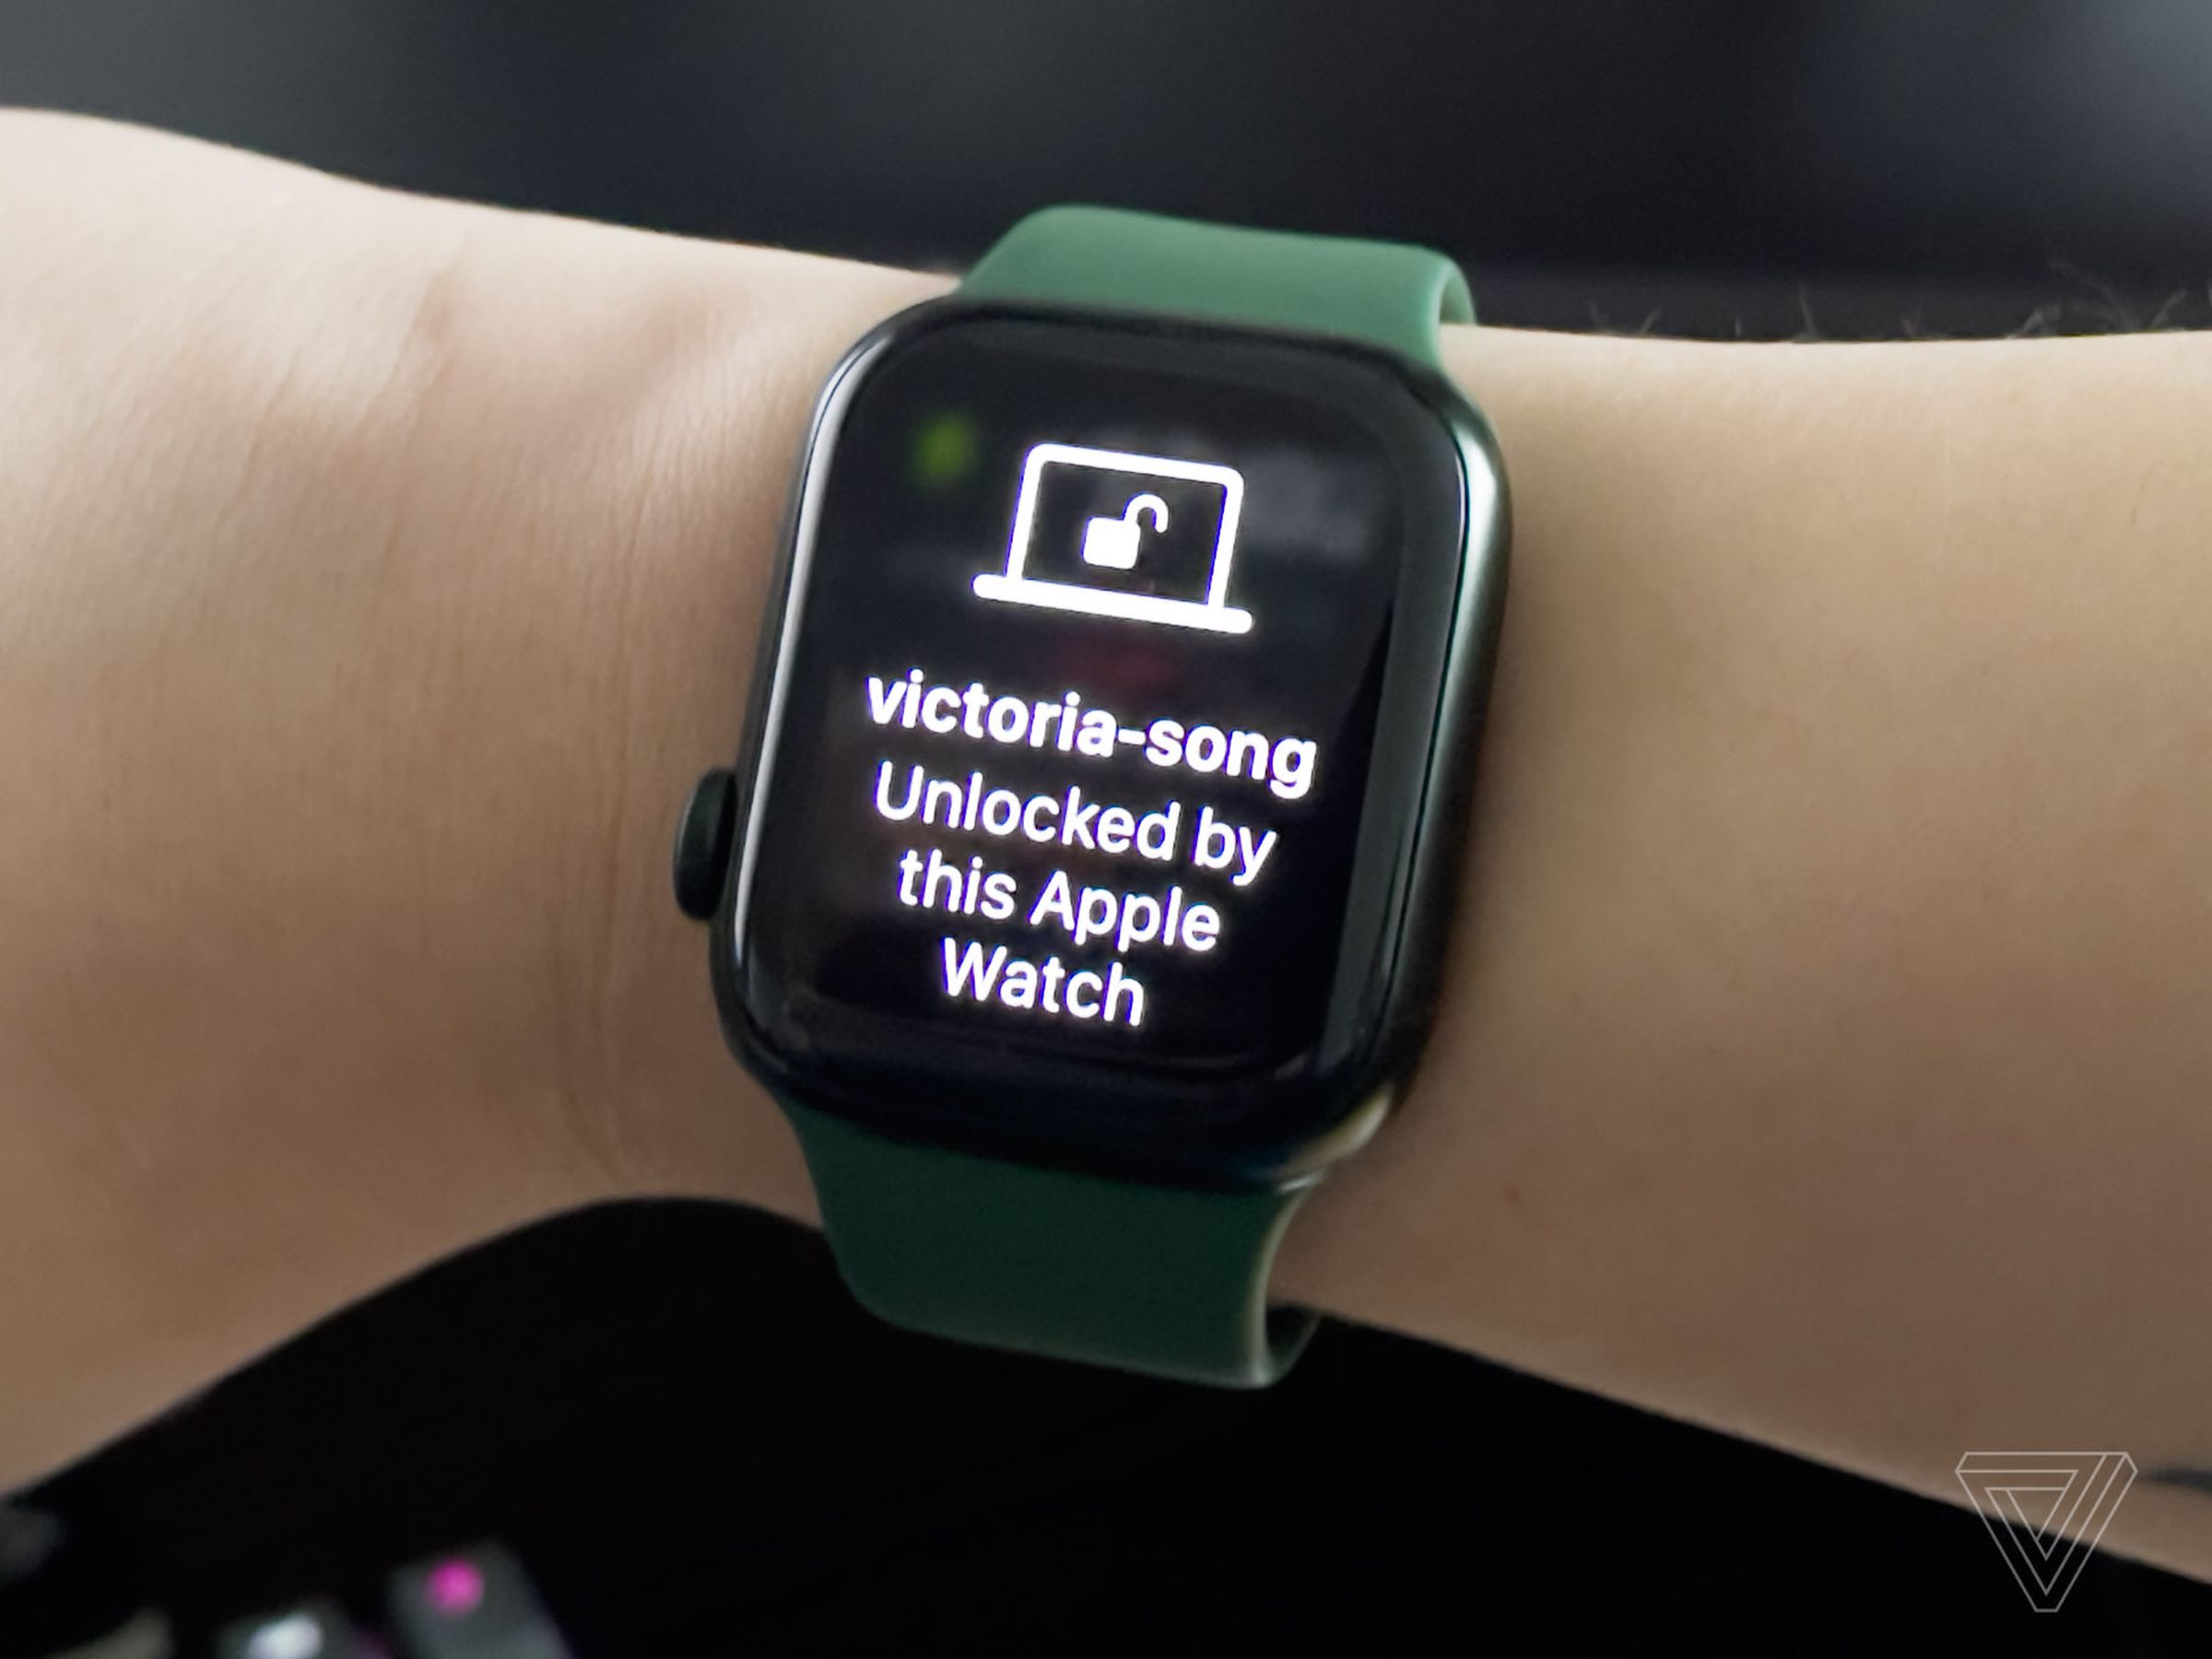 Apple Watch shown unlocking a computer